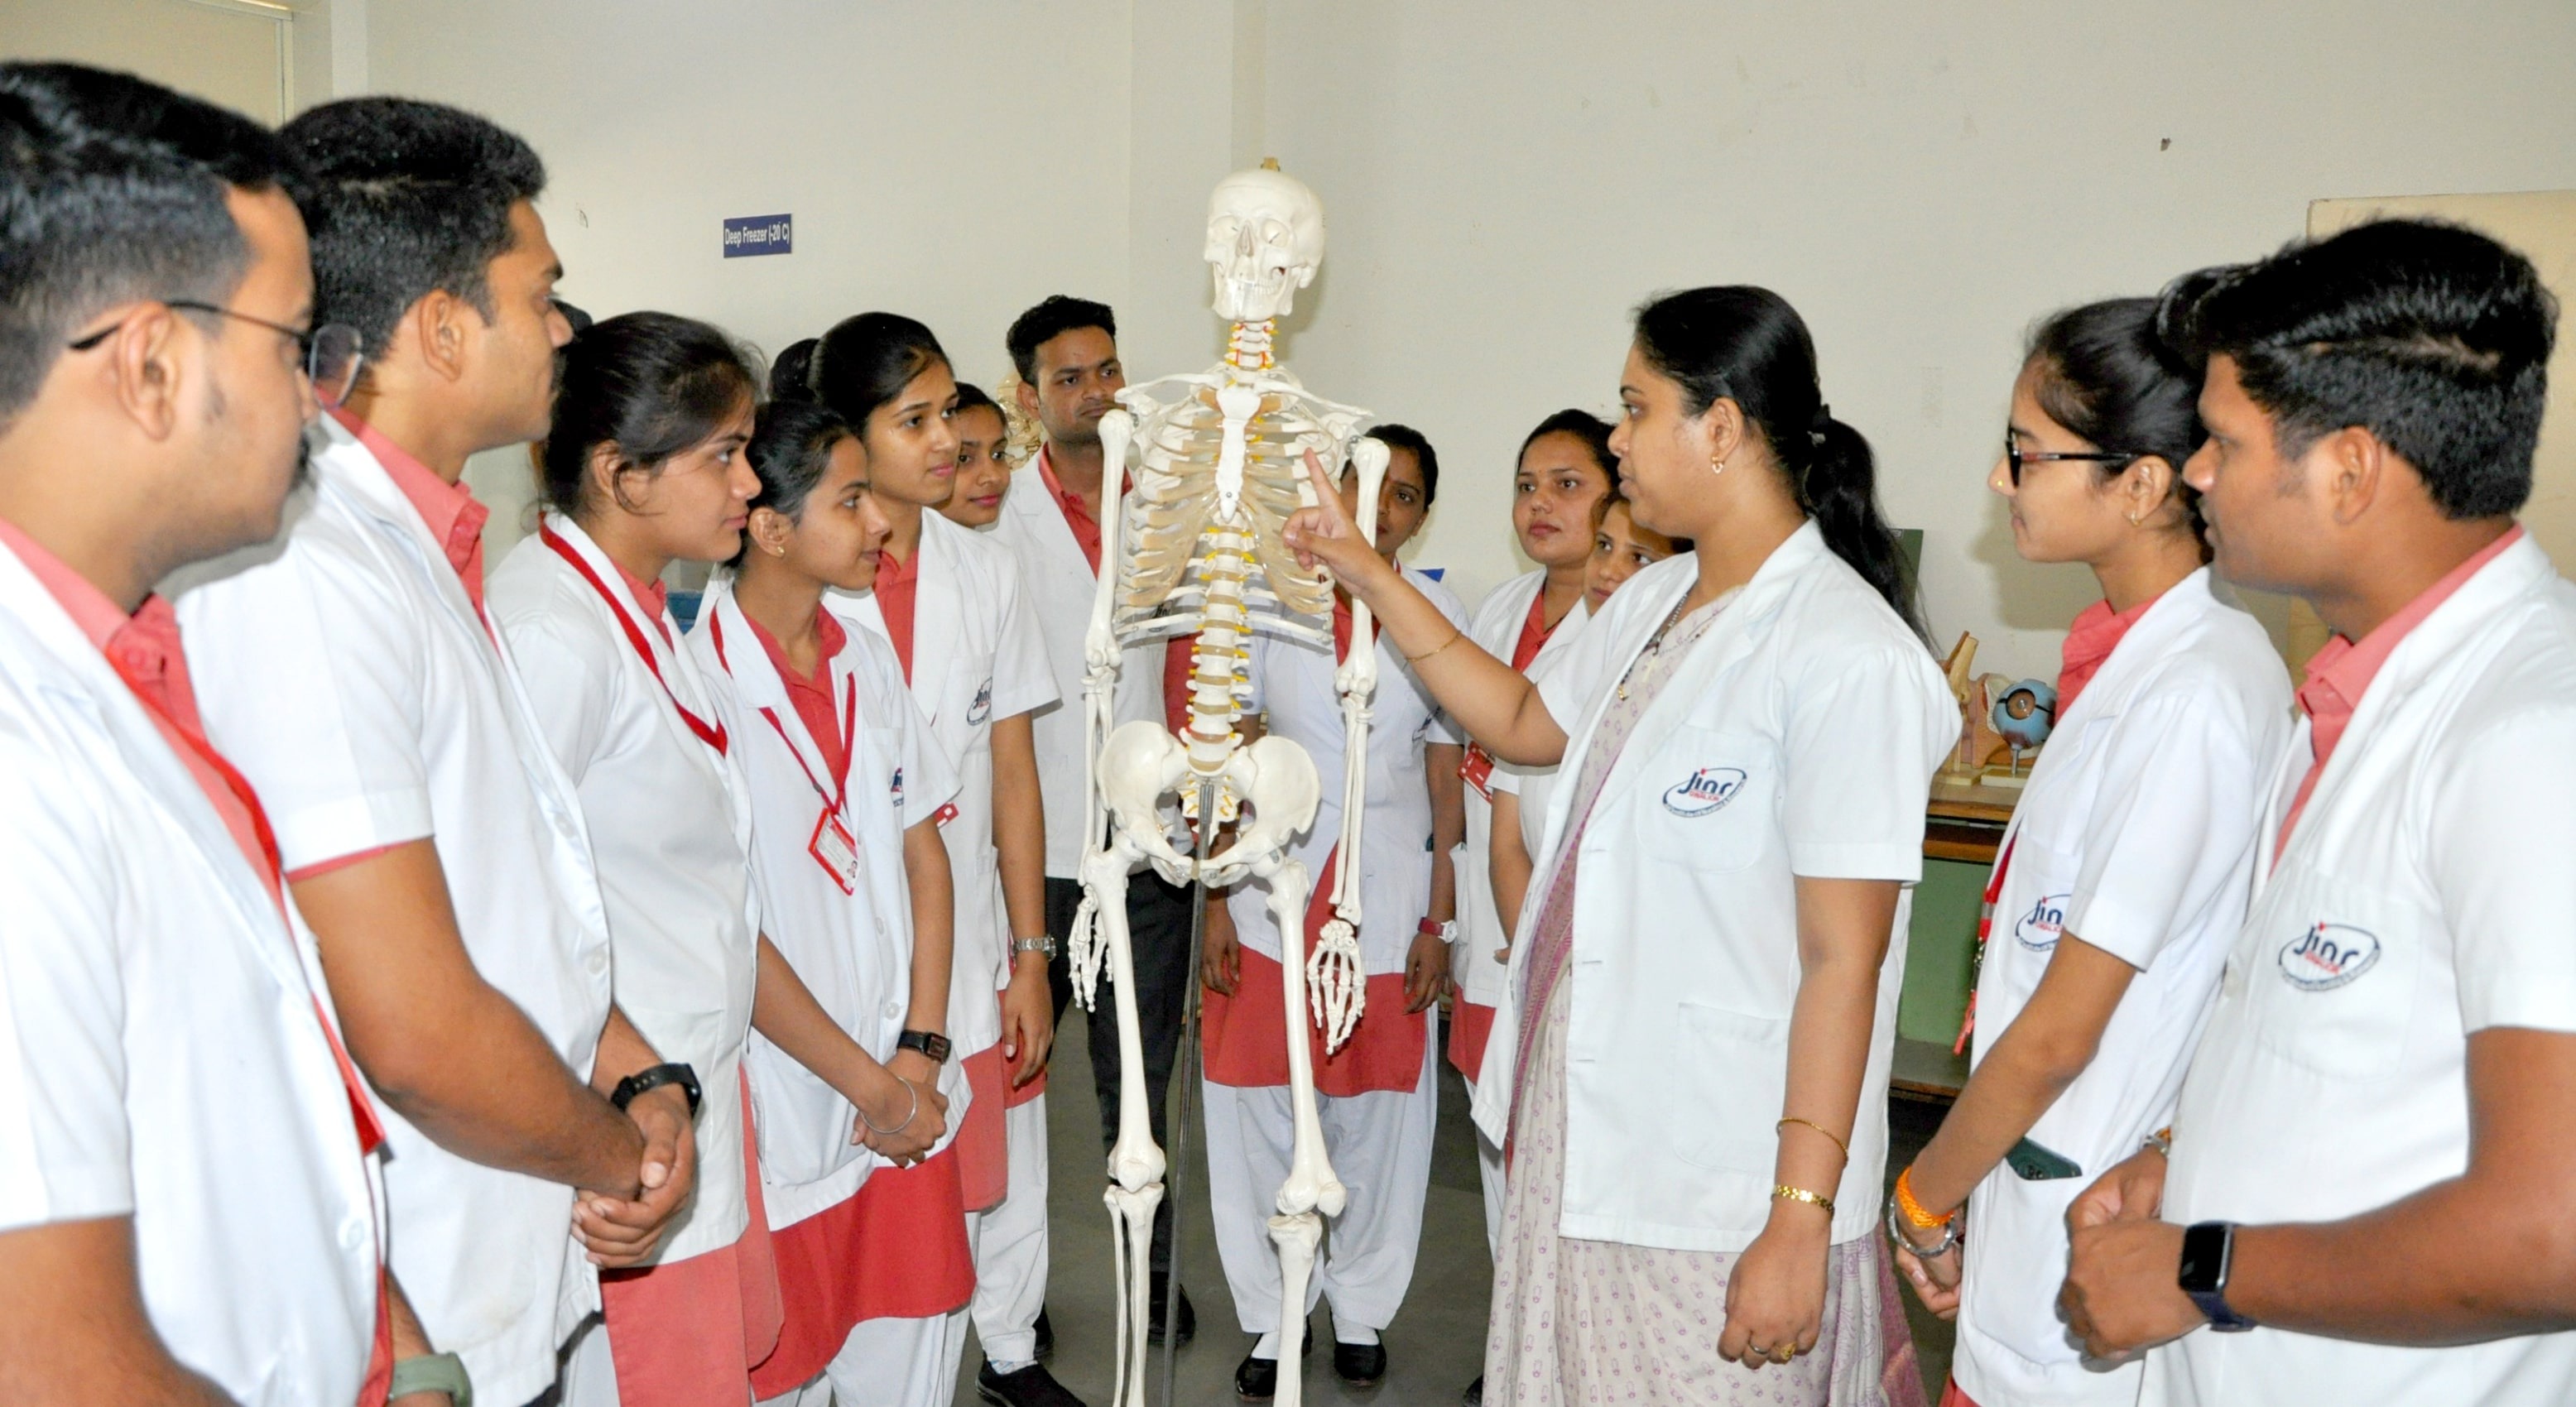 JINR - Best Nursing College Of Gwalior in MP